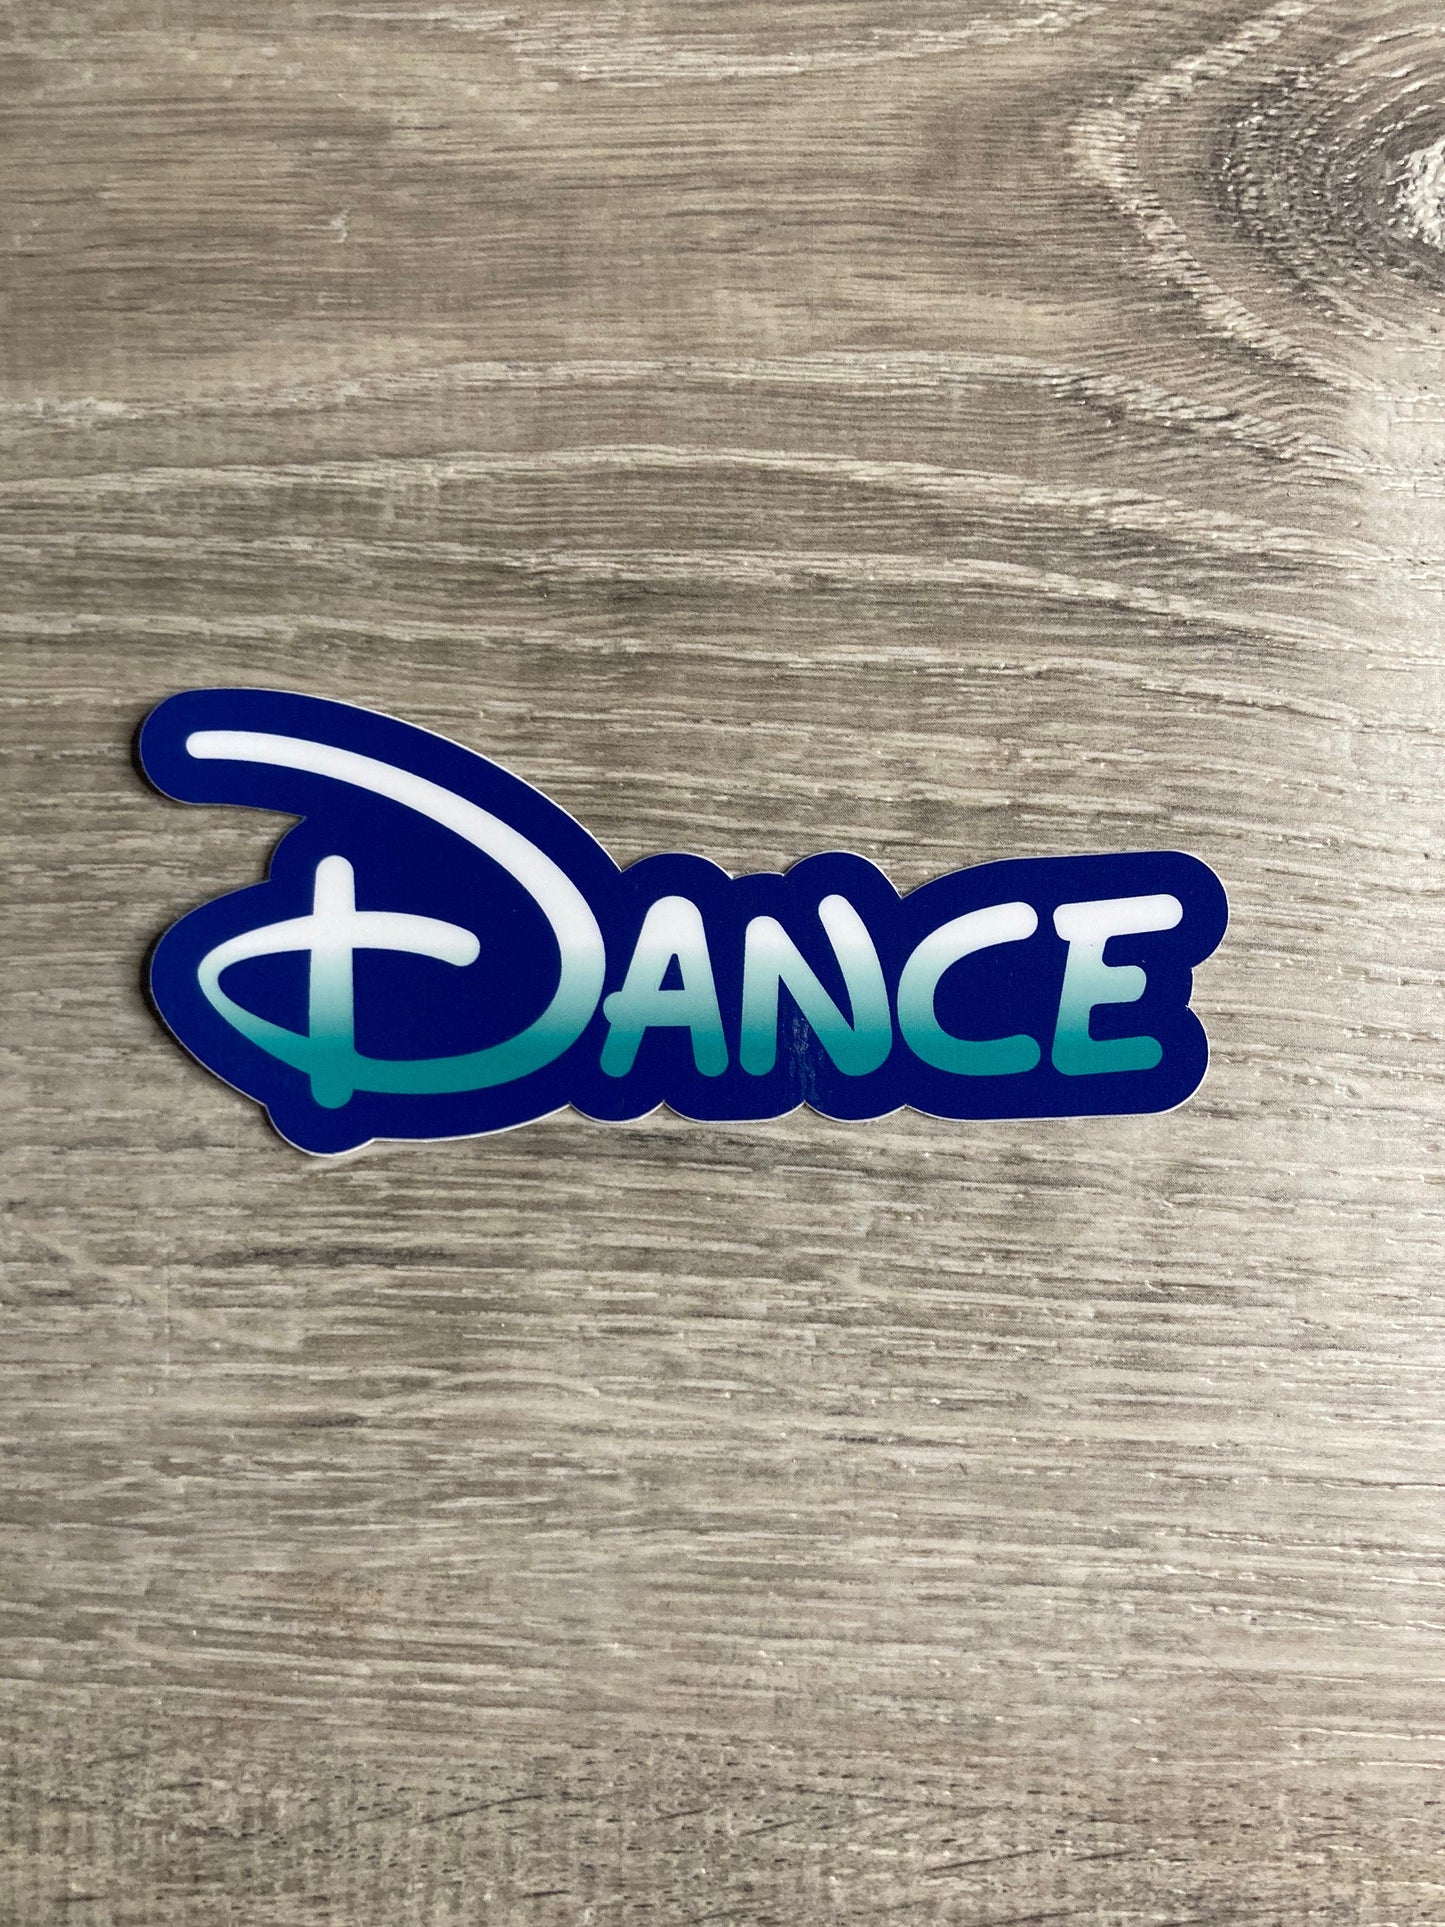 Magical Dance Vinyl Sticker, Vinyl Decal, Laptop Sticker, Dance Sticker, Gifts For Dancers, Ballet Gifts